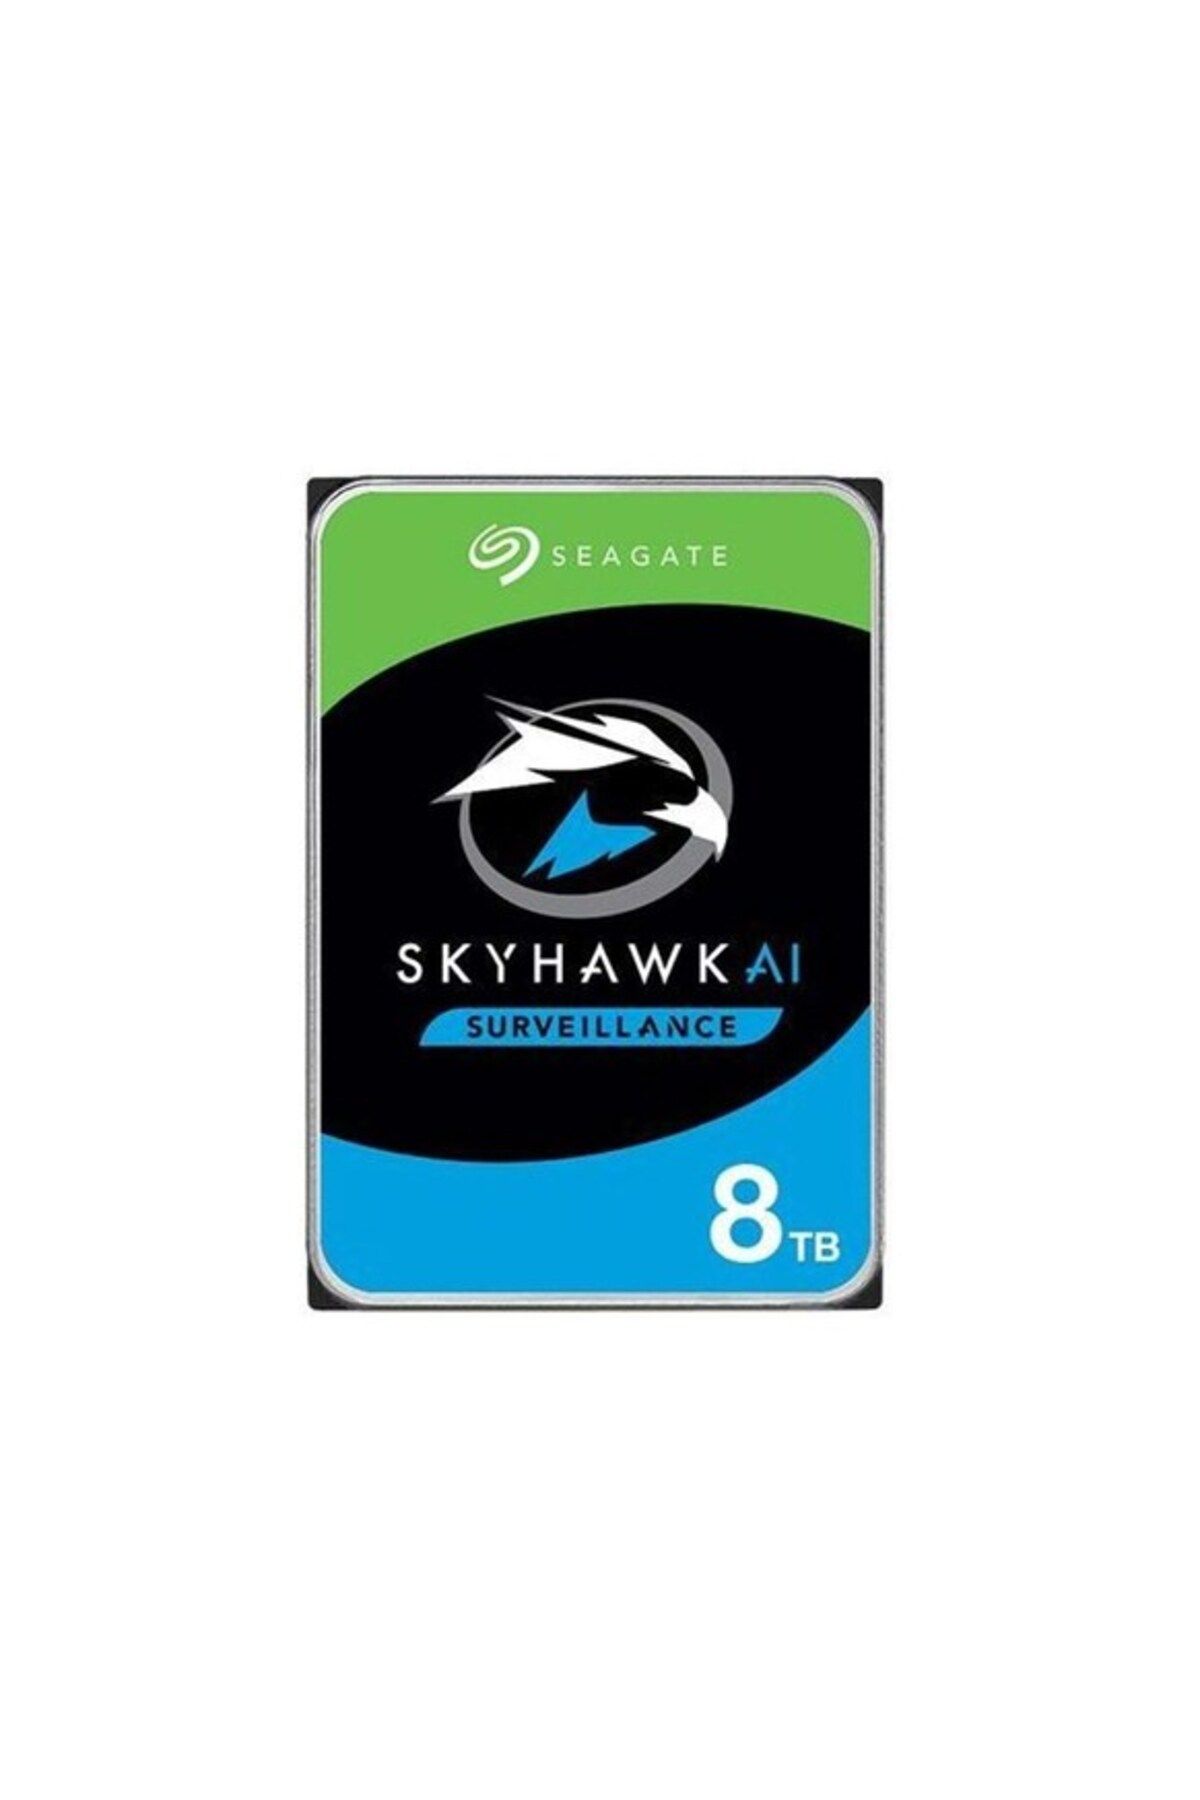 Seagate St8000ve001 Skyhawk 3.5" 8tb 7200rpm 256mb Sata 7/24 Harddisk